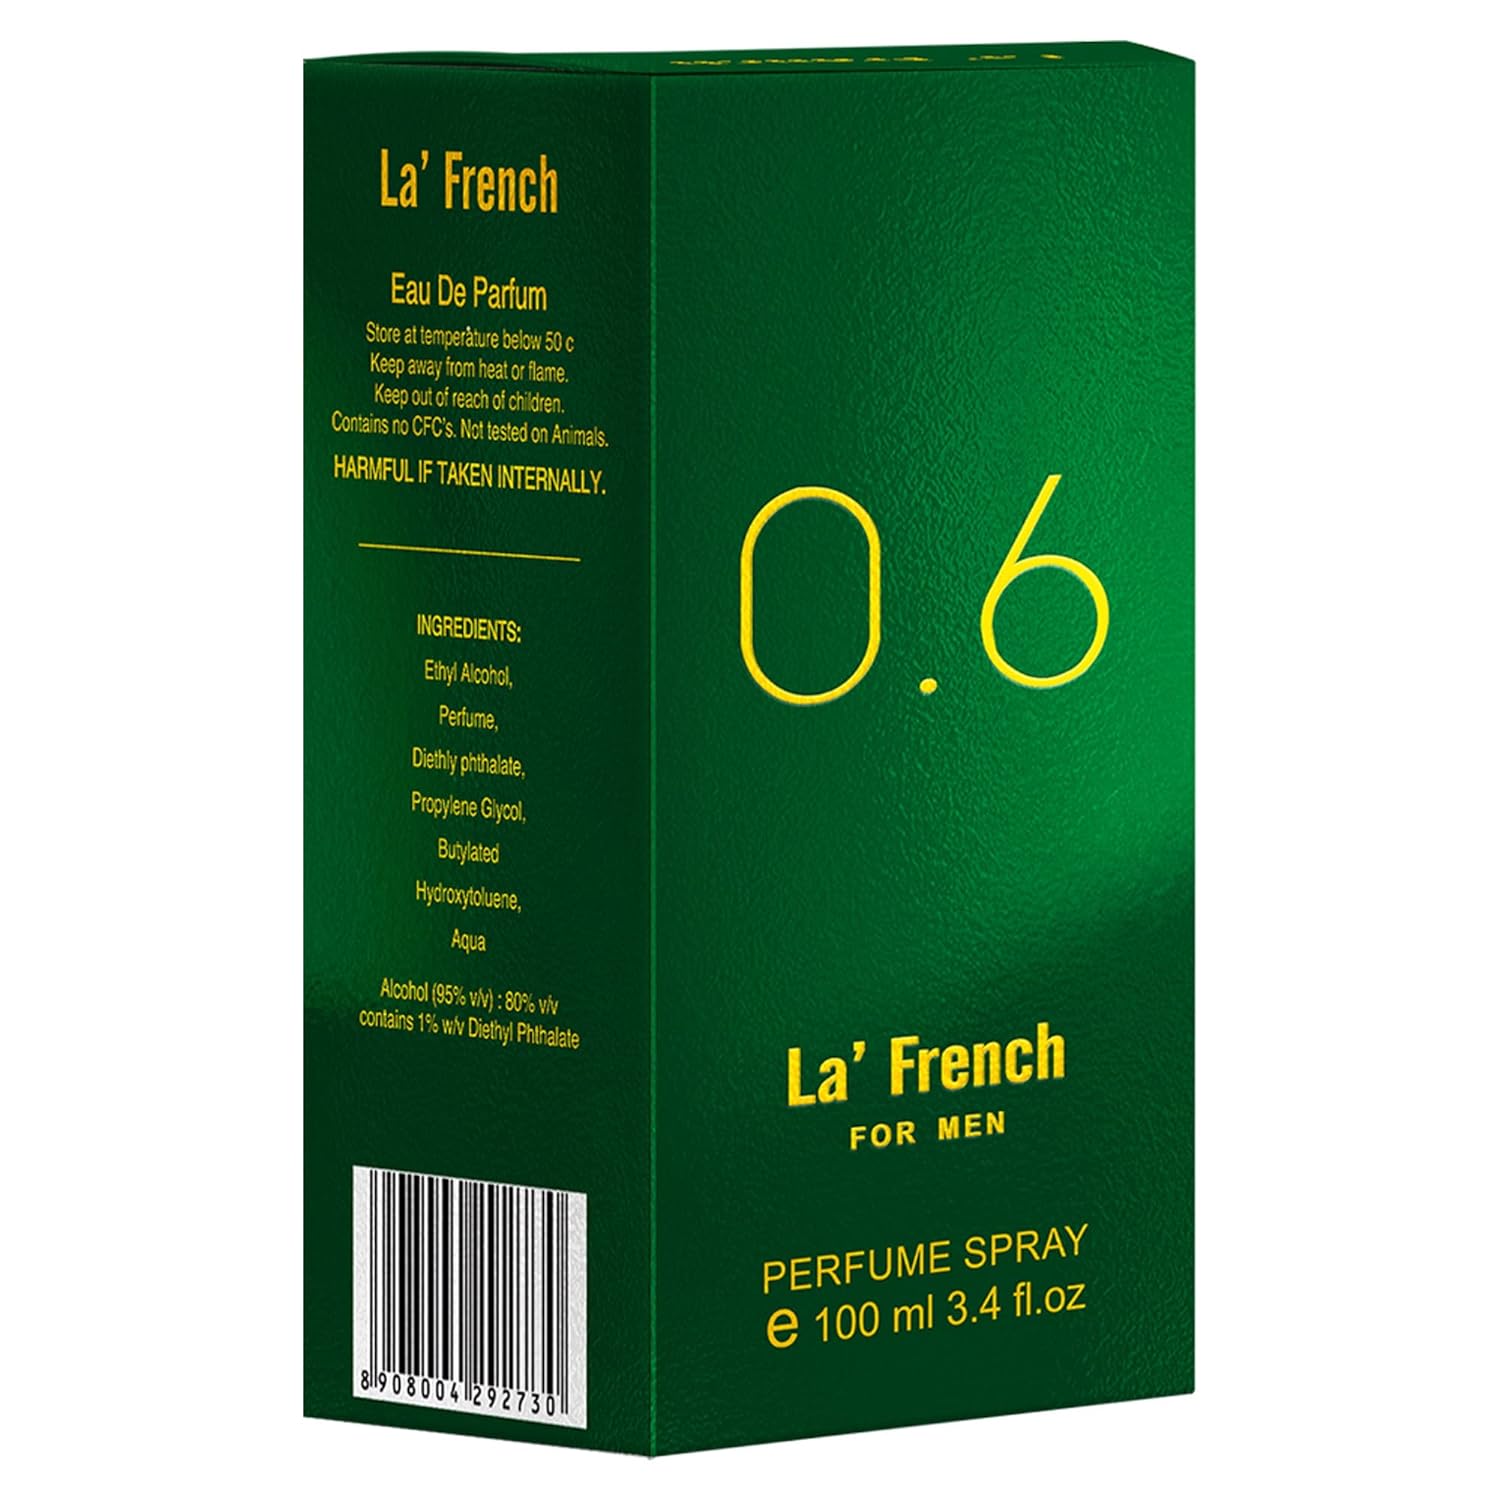 La French 0.6 Perfume for Men 100ml | Premium Long Lasting Mens Perfume Scent | Date night fragrance Body Spray for Men | Gift for Husband Boyfriend.